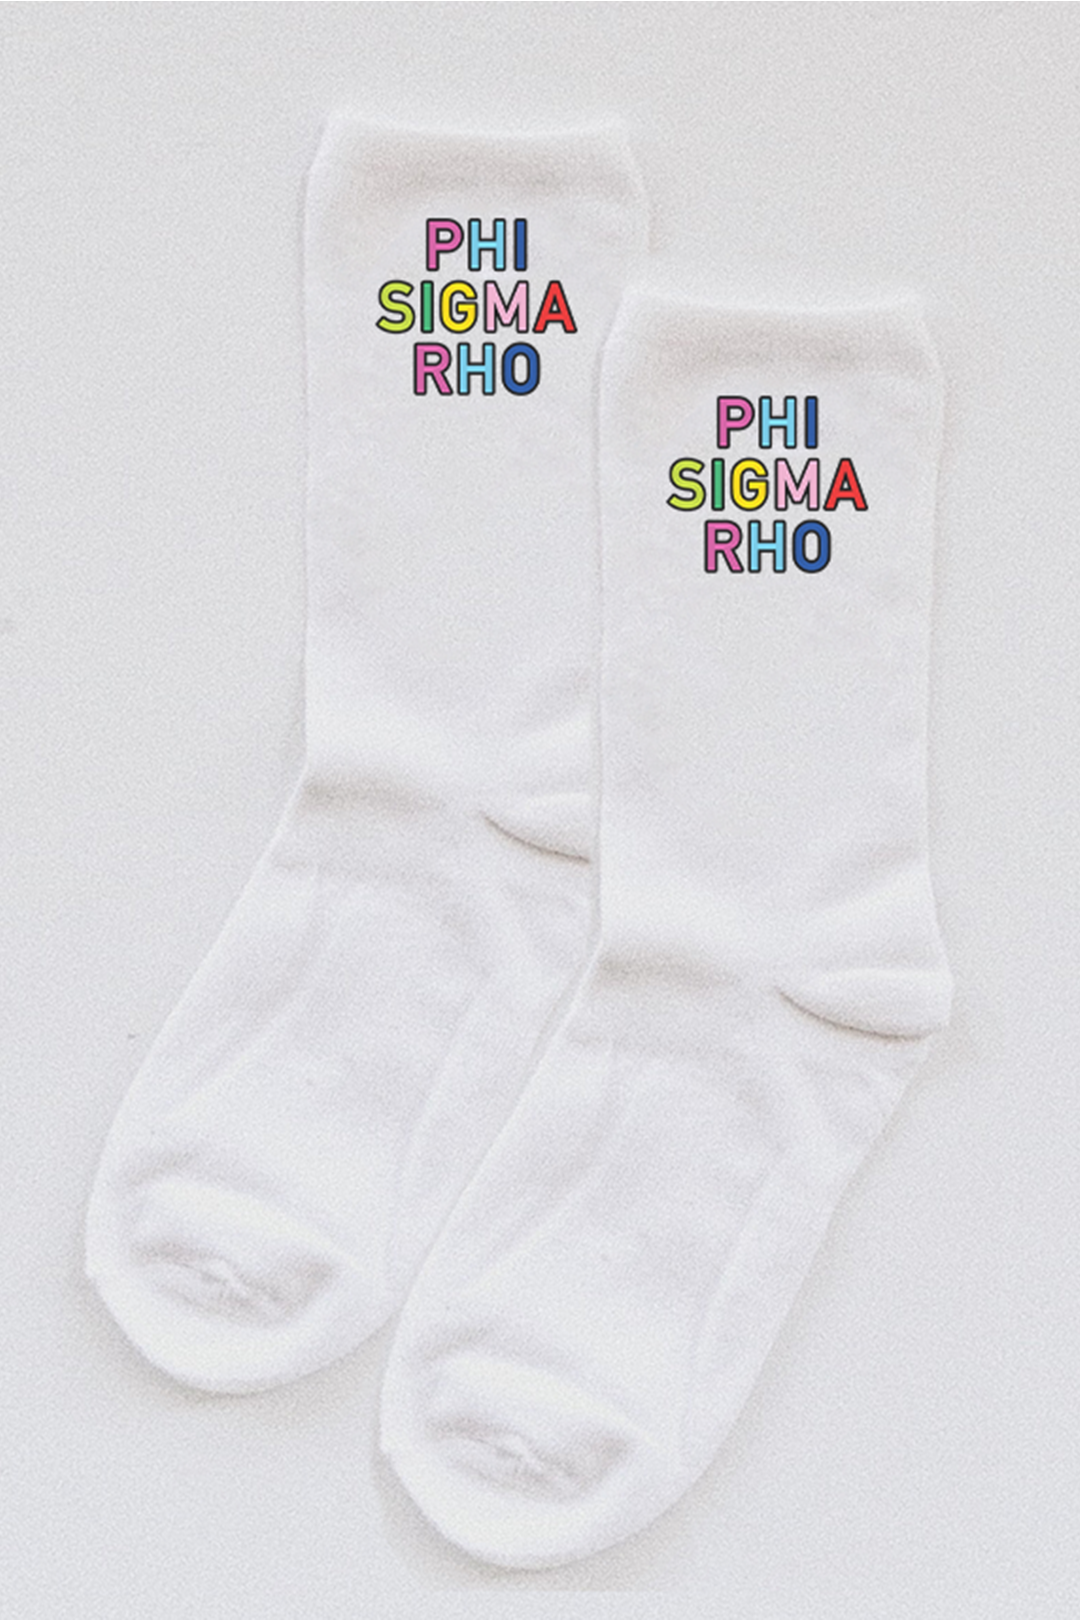 Colorful socks - Phi Sigma Rho